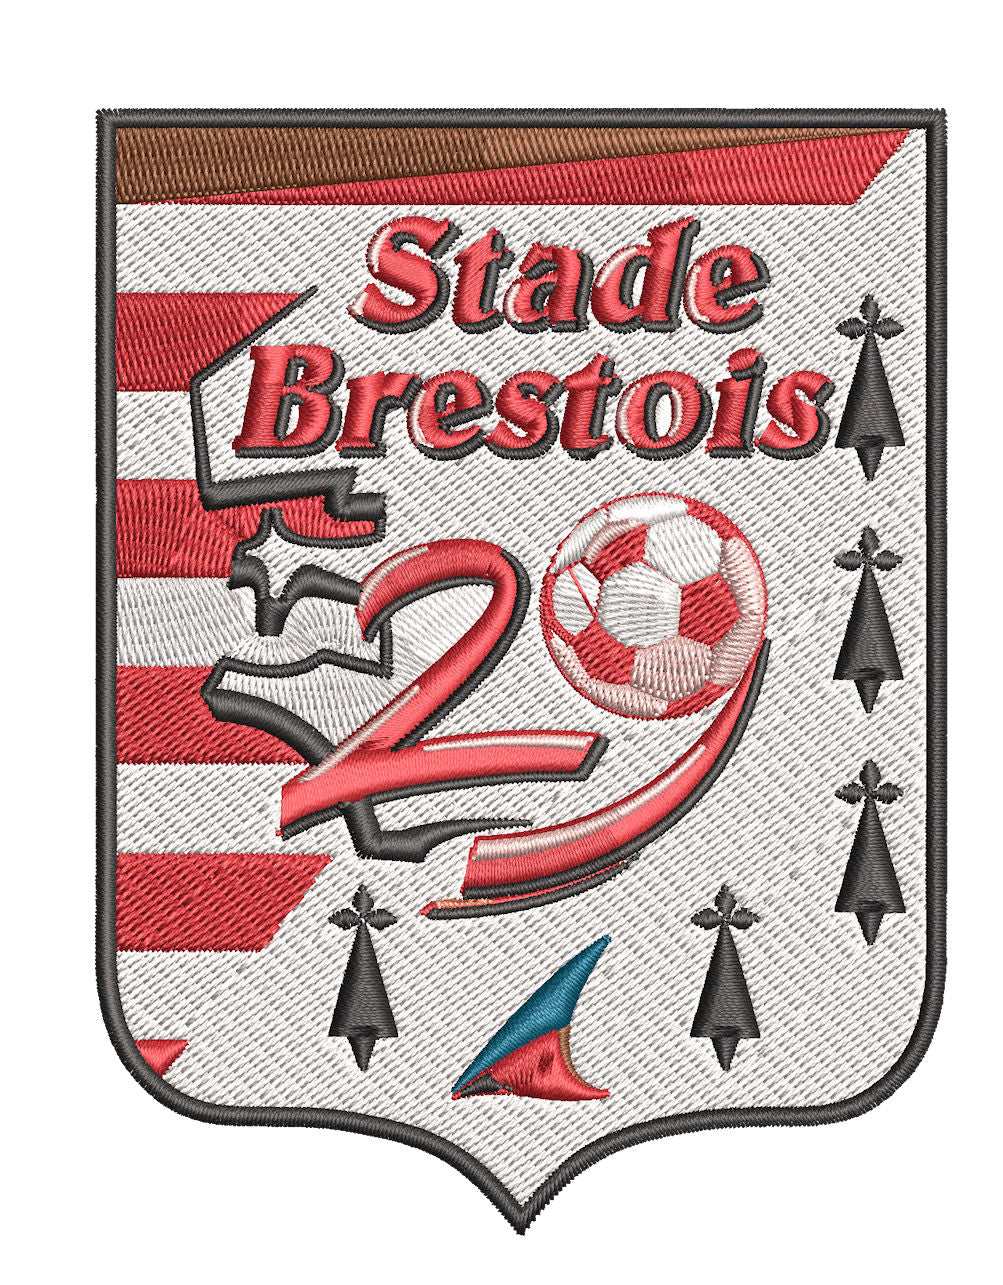 Stade Bretois Football Team: Embroidery Design FineryEmbroidery